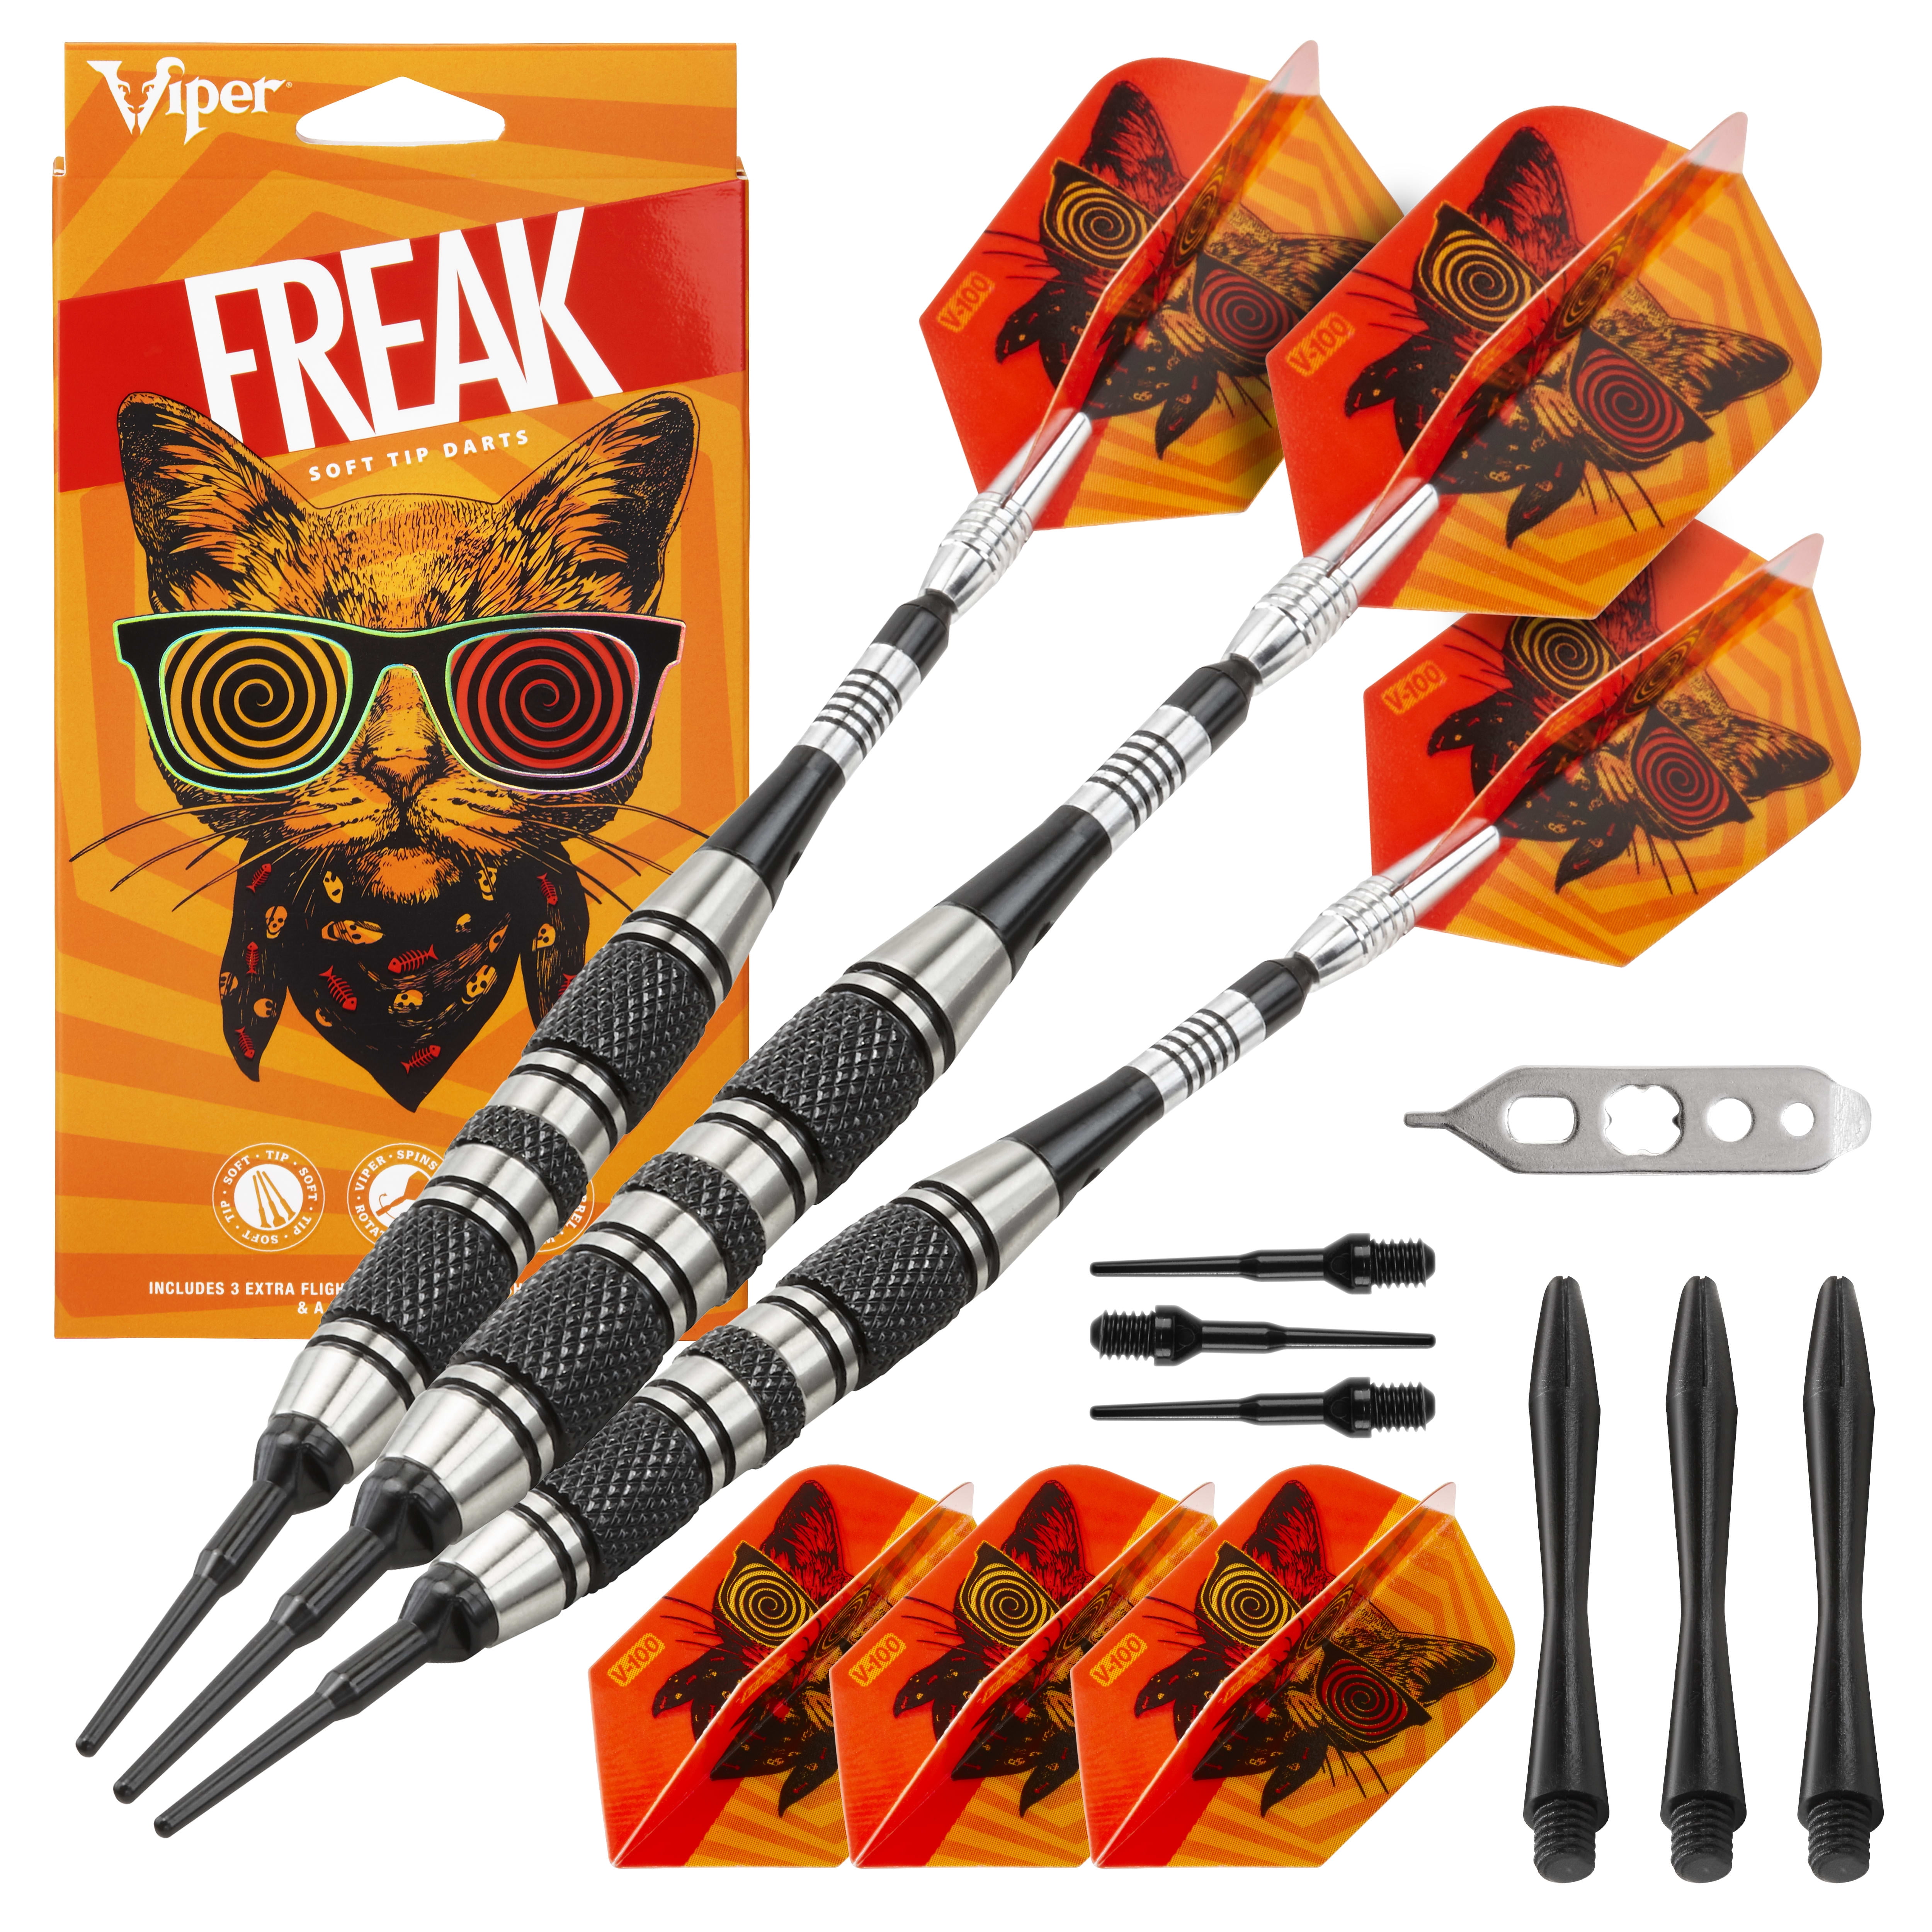 Viper The Freak 18gm Dart Set 